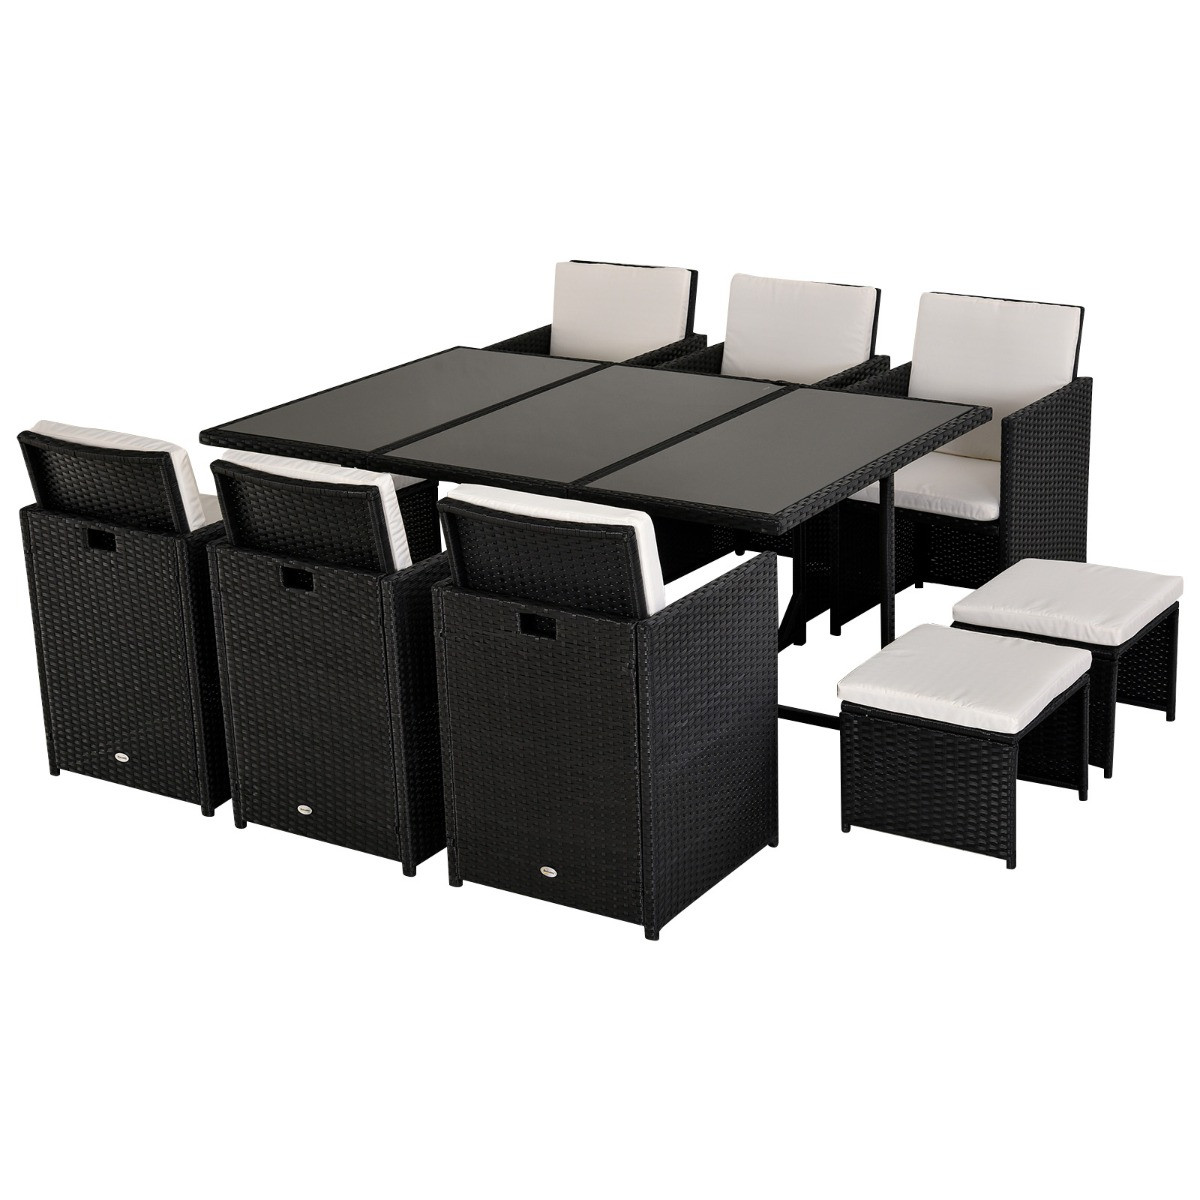 Outsunny Rattan Garden Furniture Cube Set, 10 Seater - Black>